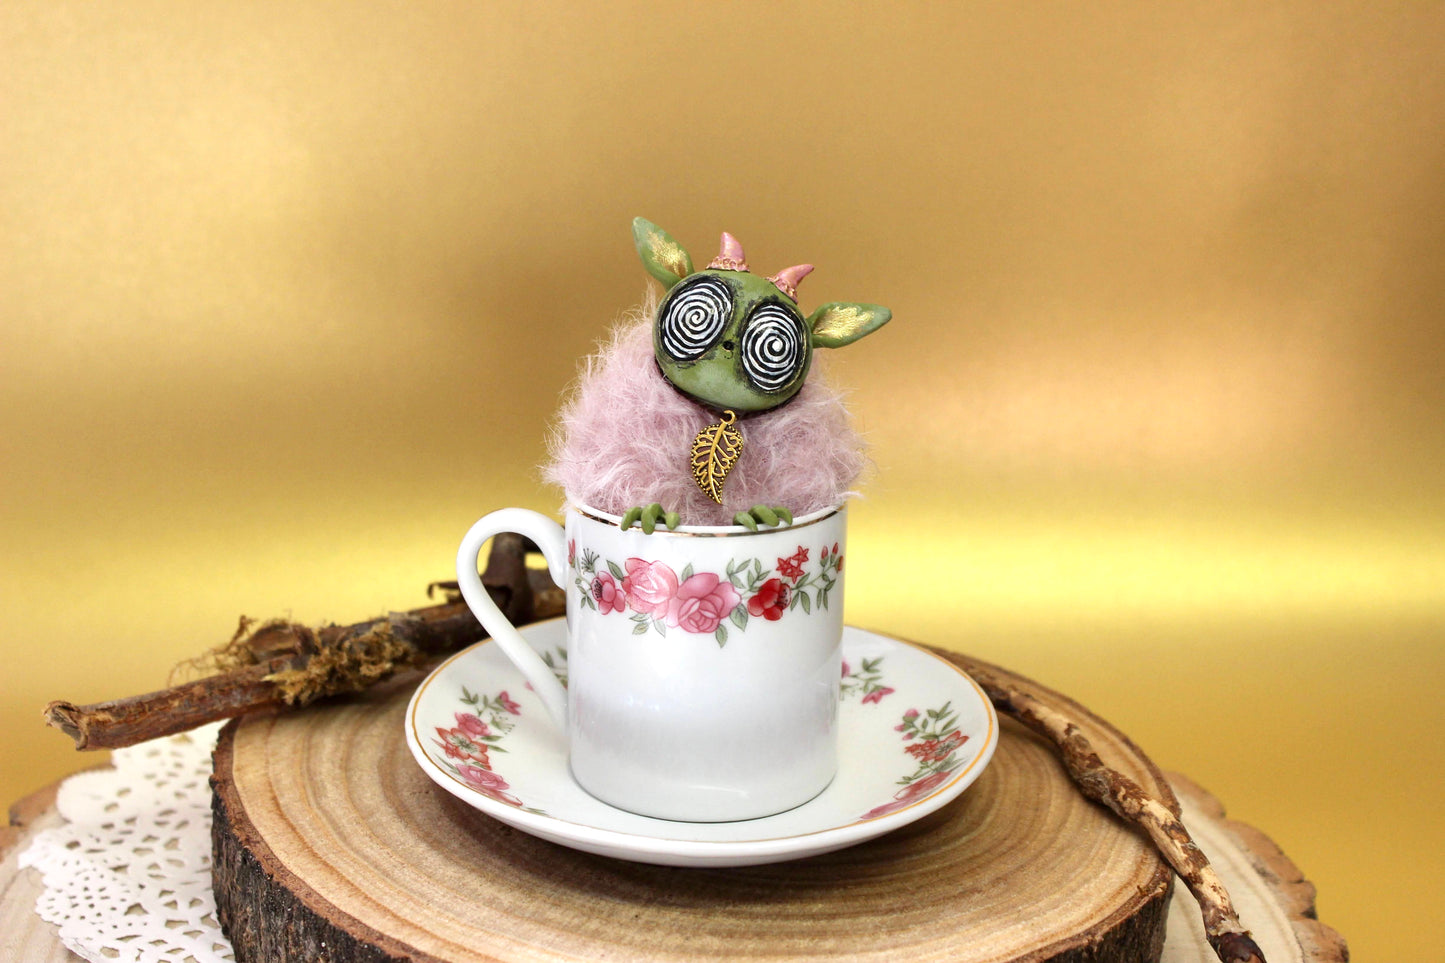 Audrey the Teacup Critter